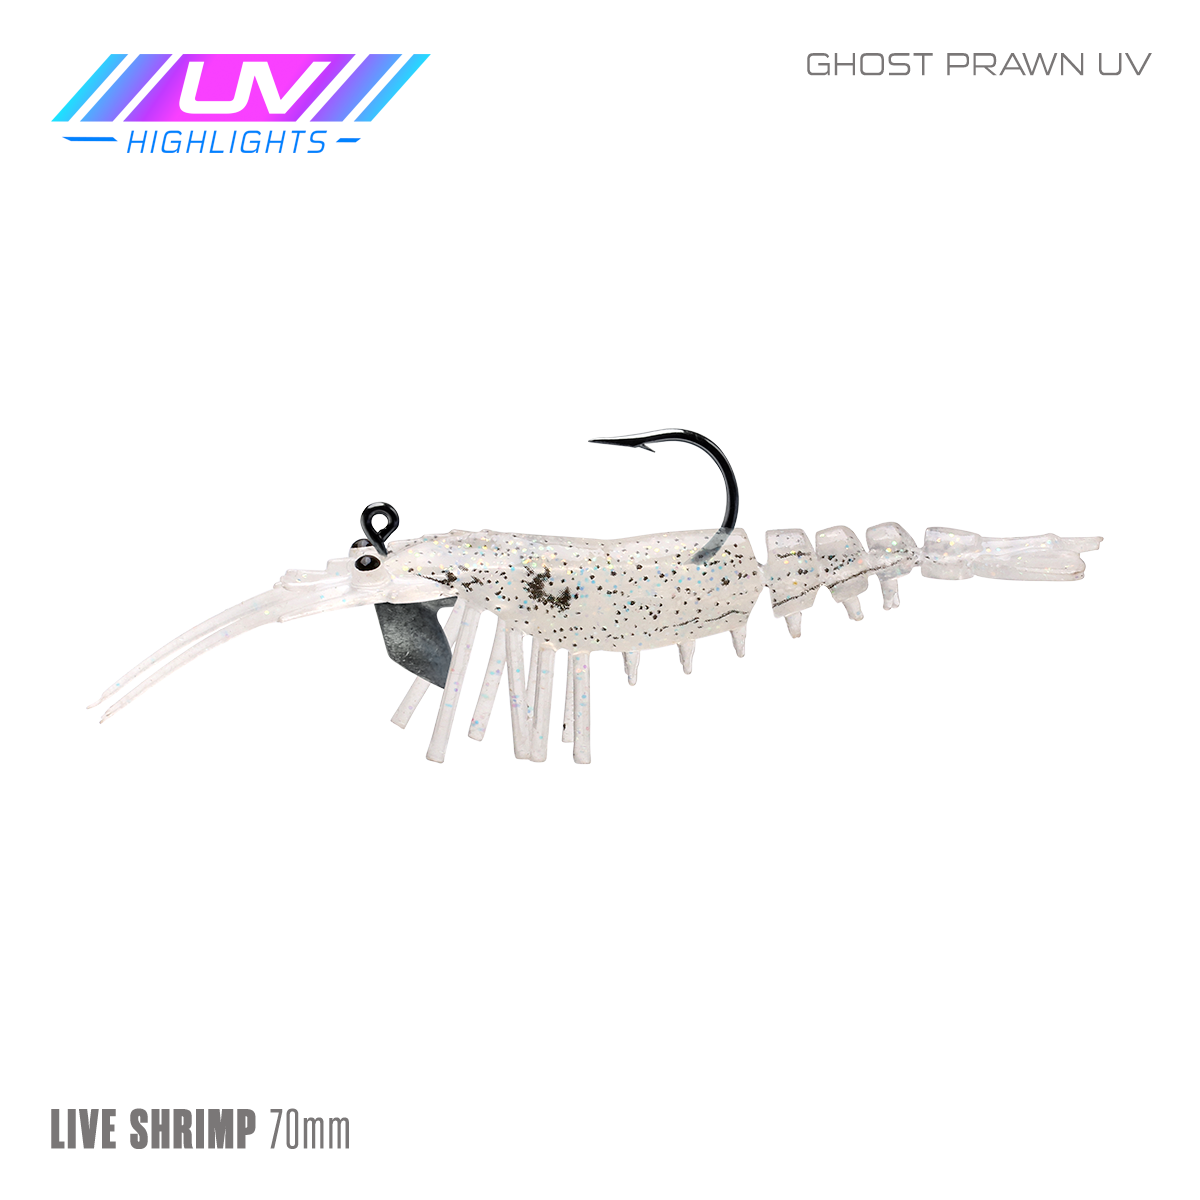 Live Shrimp 70mm